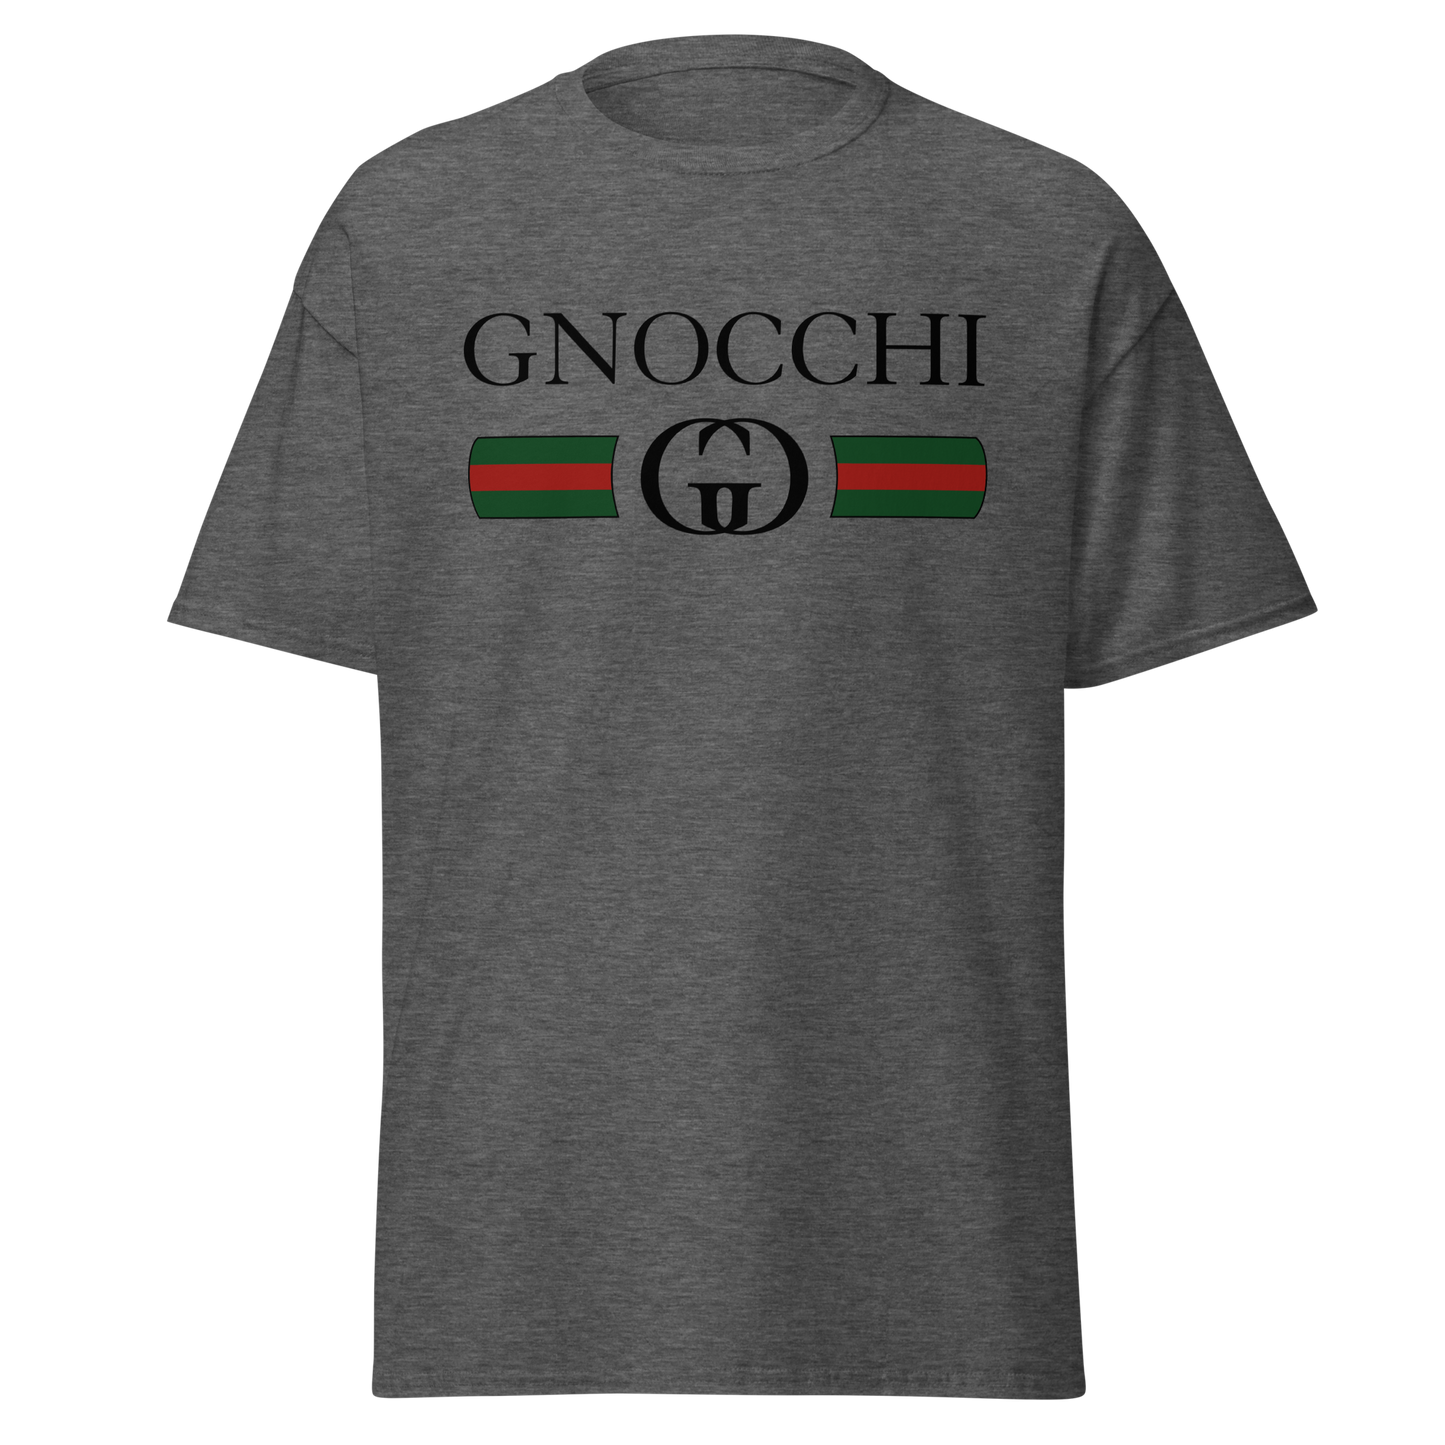 Gnocchi Gucci Italian Pride T-Shirt - Vintage Tee for Italians